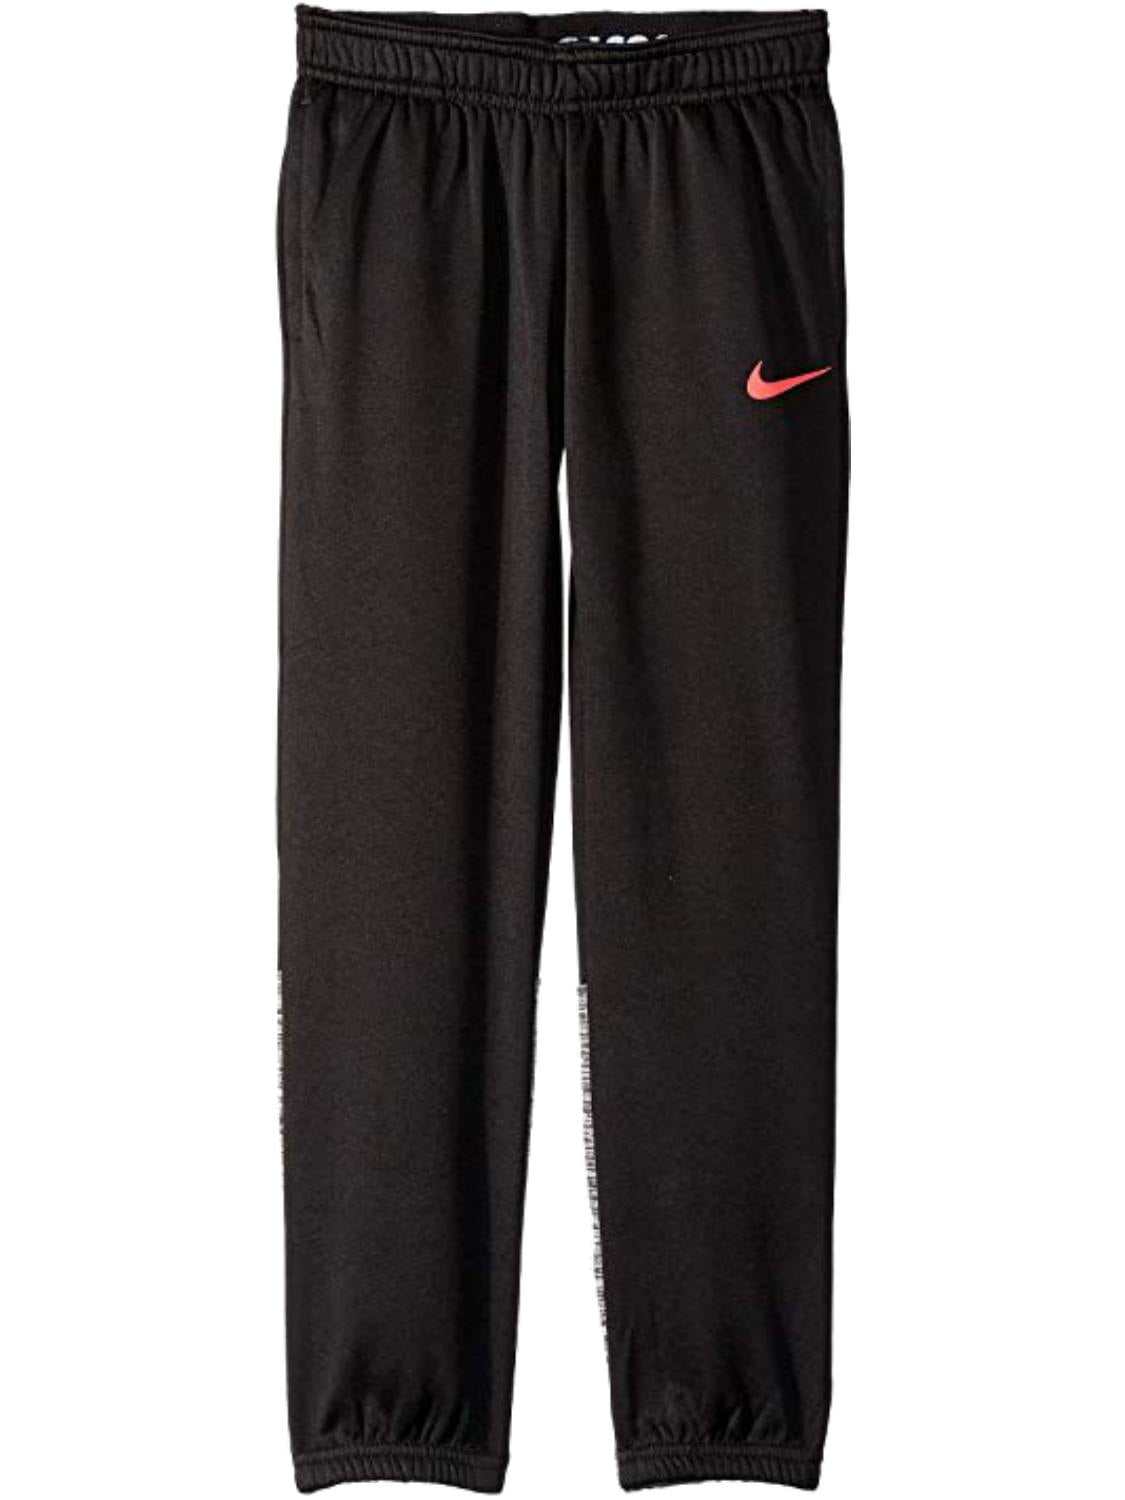 Nike Therma Fit Sweatpants Size Medium | Sweatpants, Clothes design, Fashion